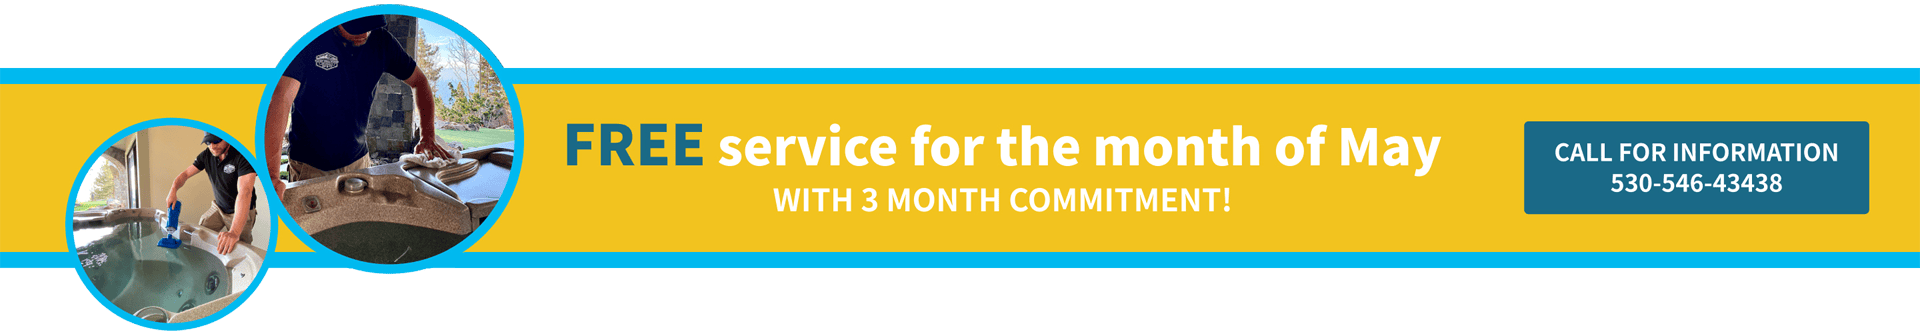 img - May free service fee